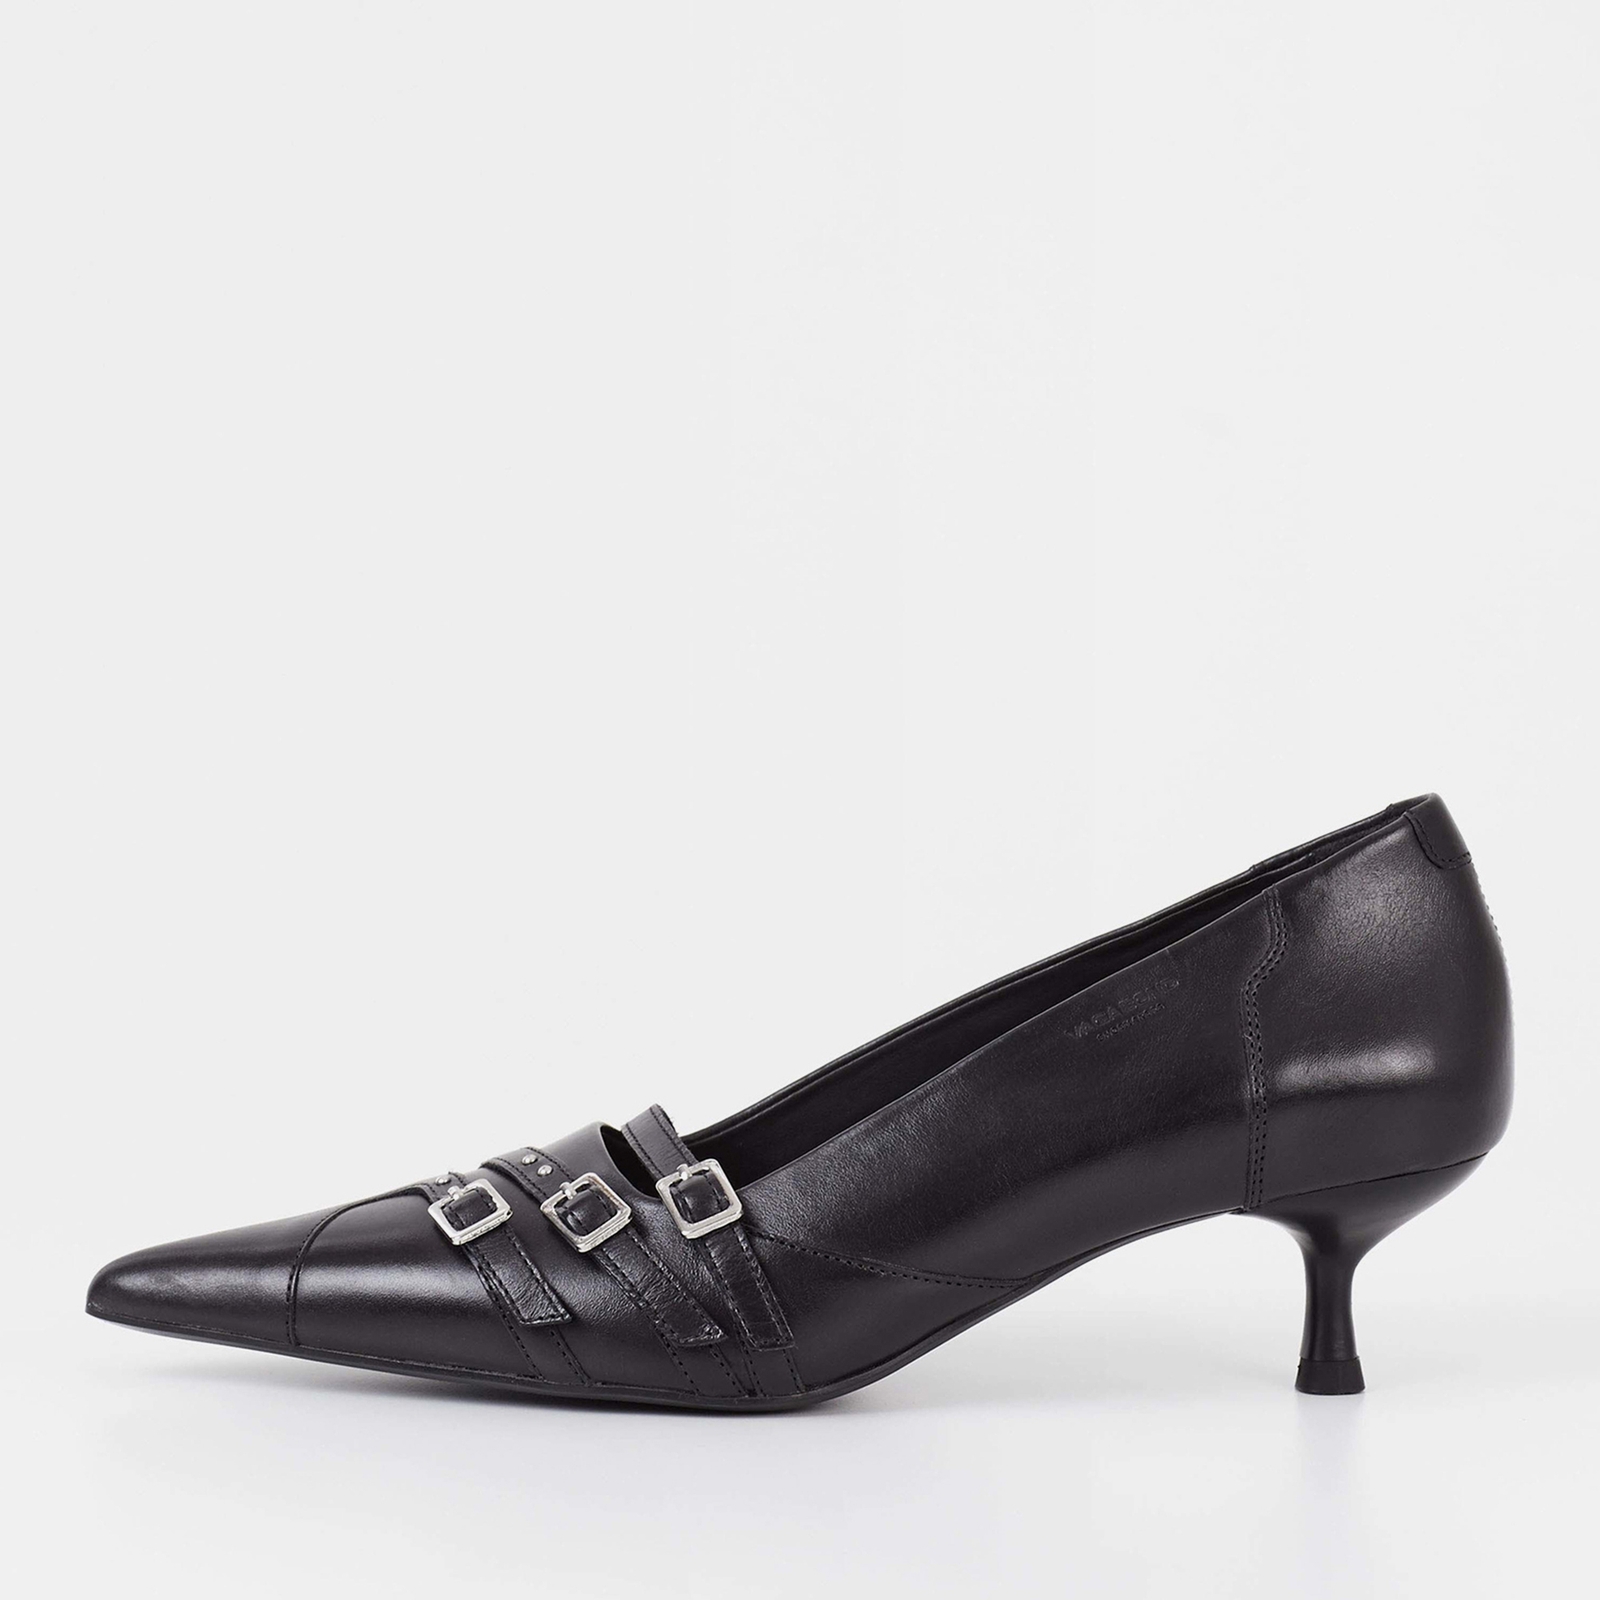 Vagabond Women’s Lykke Leather Kitten Heeled Court Shoes